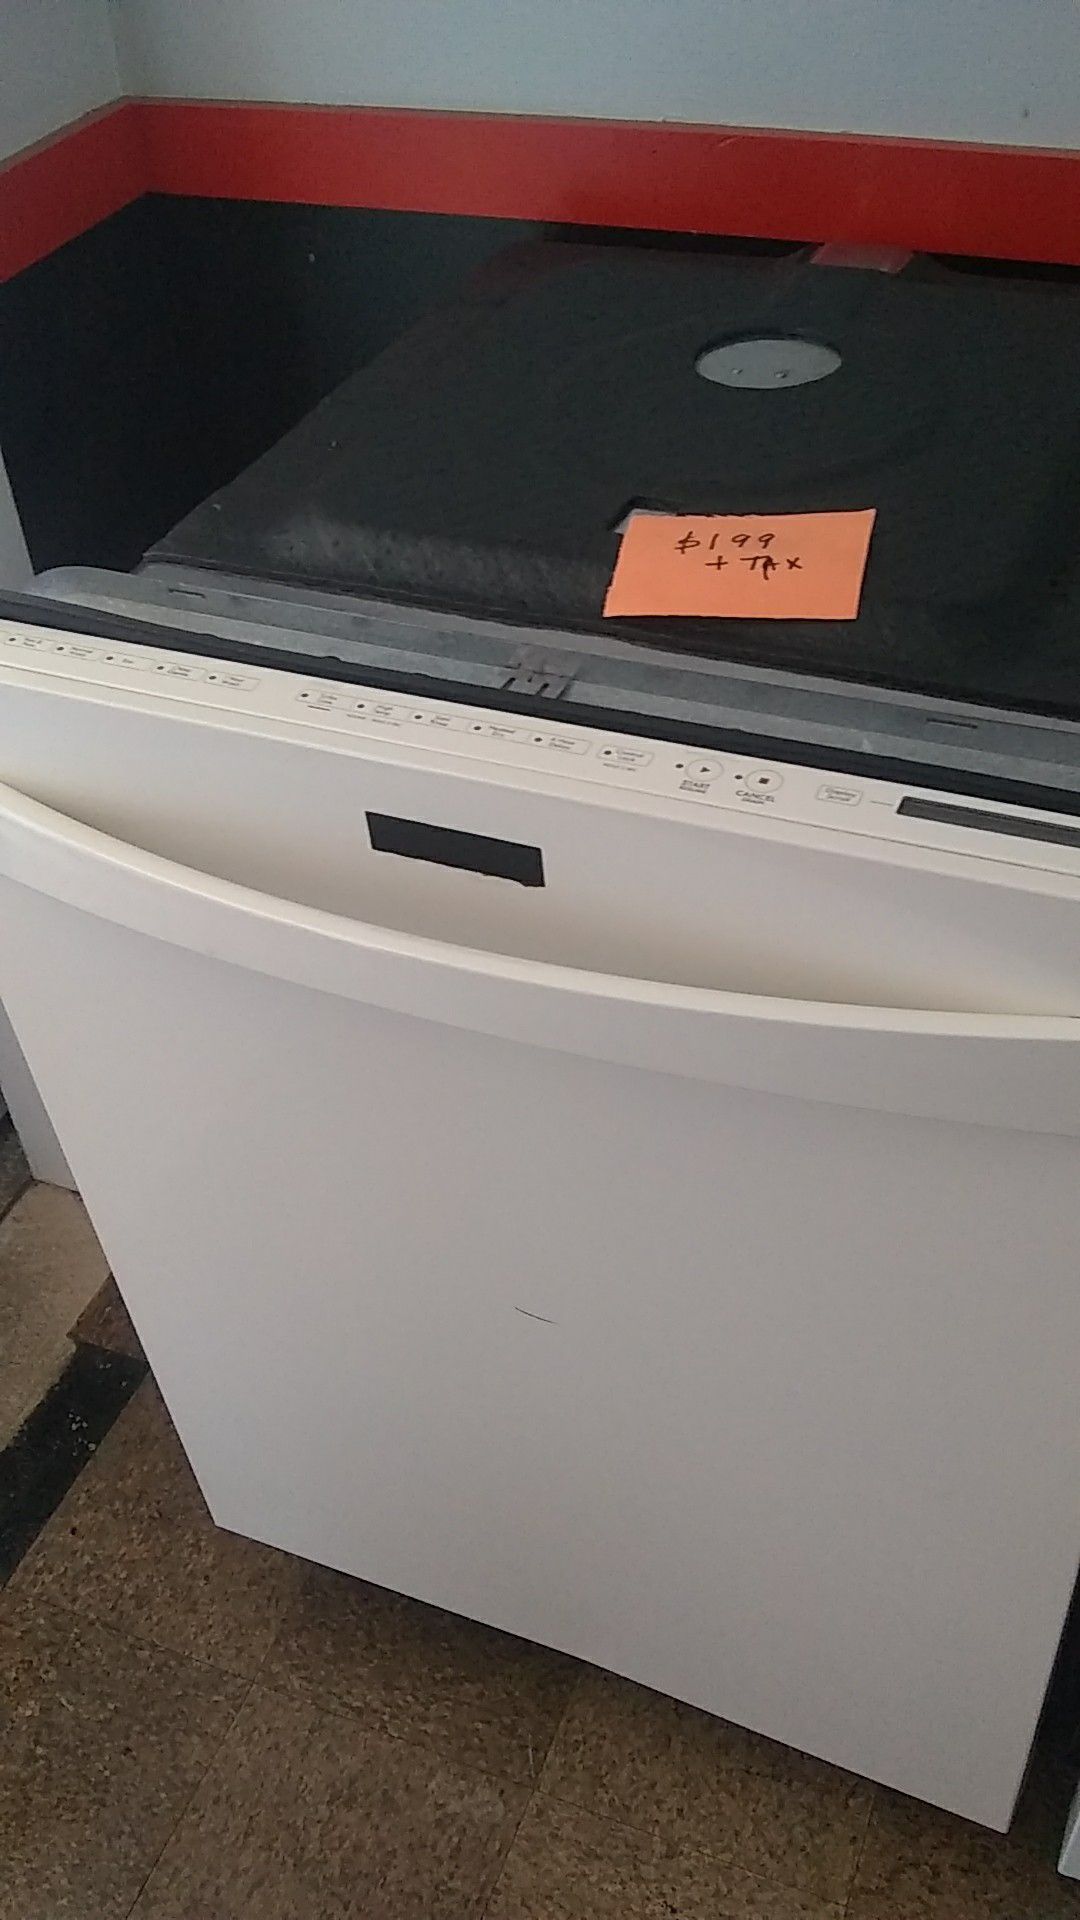 Kenmore elite dishwasher excellent condition